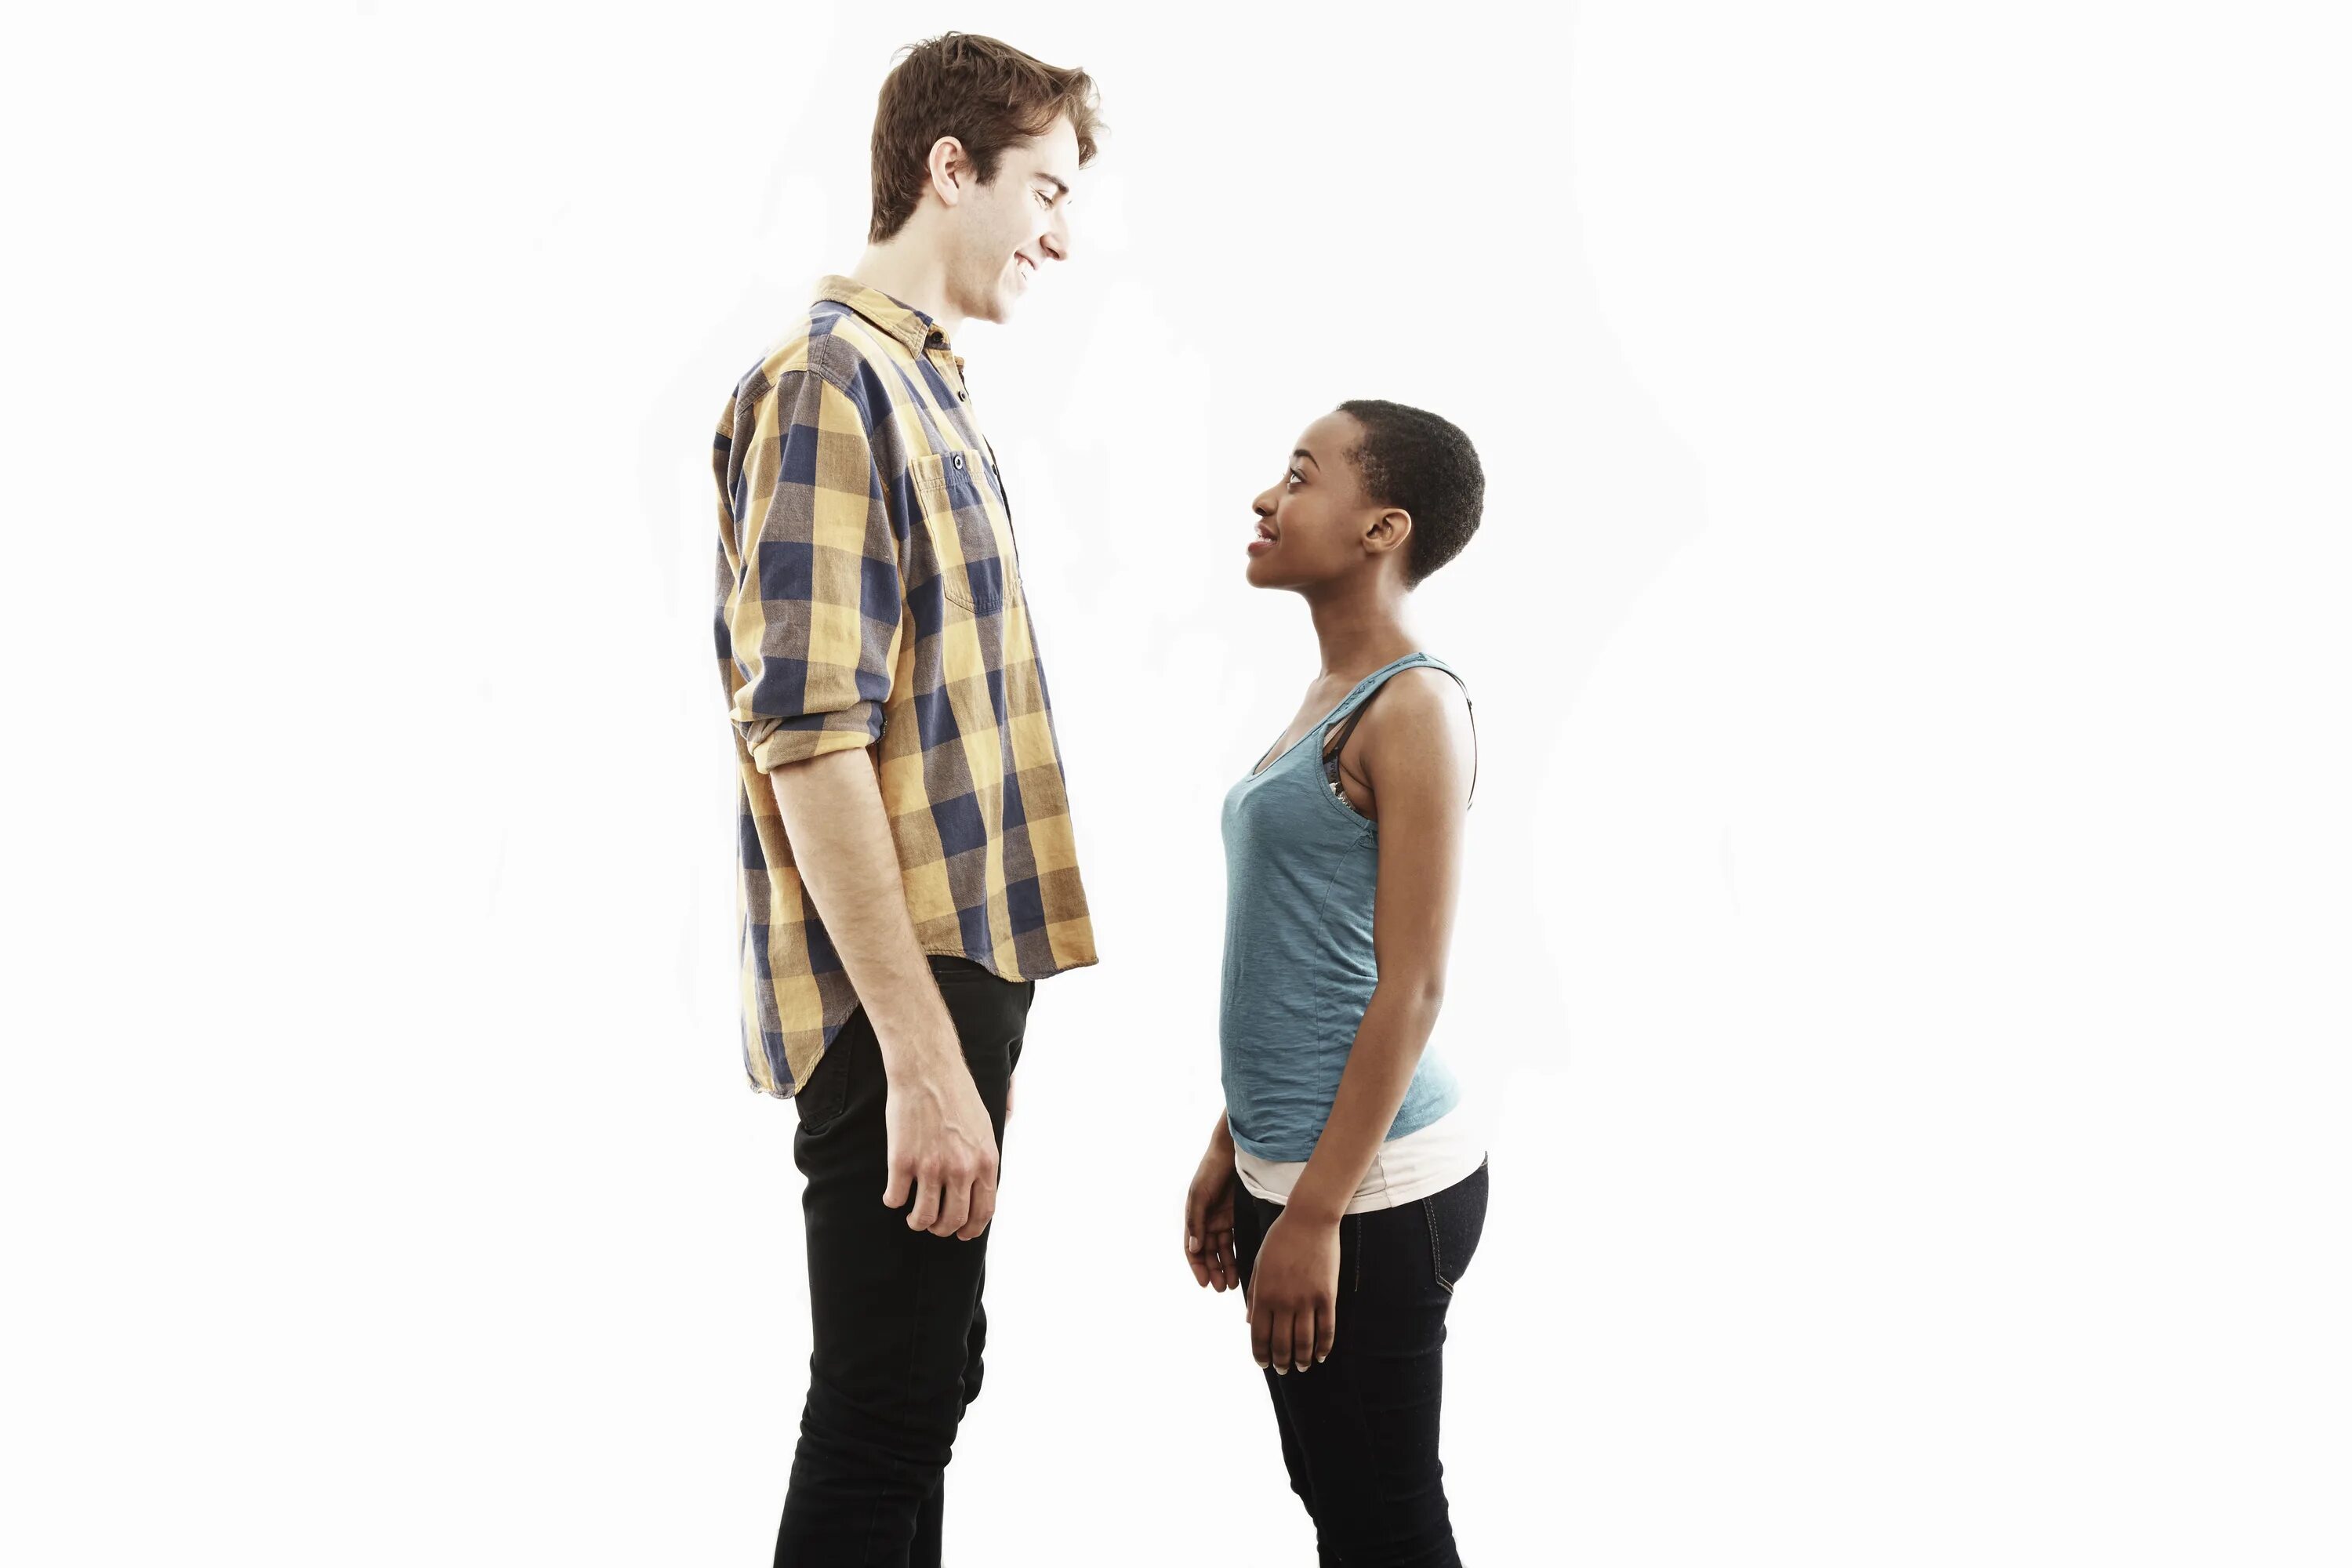 People want to live in an. Девушка выше парня. Высокий и низкий мужчина. Низкий рост. Высокий парень с девушкой.